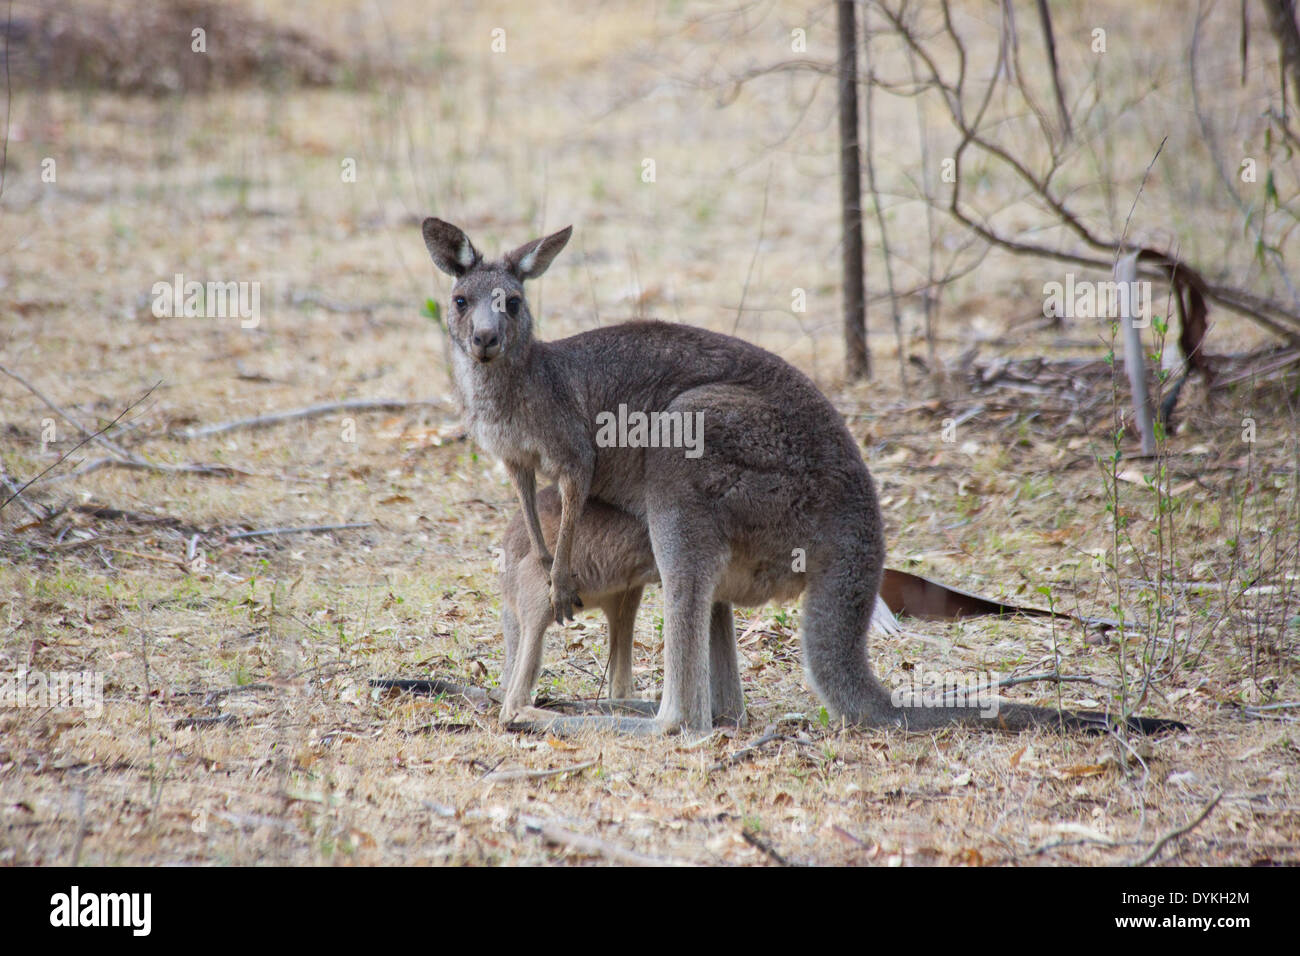 Mother nursing joey from pouch - Eastern Grey Kangaroo, Macropus giganteus, Wollemi National Park, NSW, Australia Stock Photo